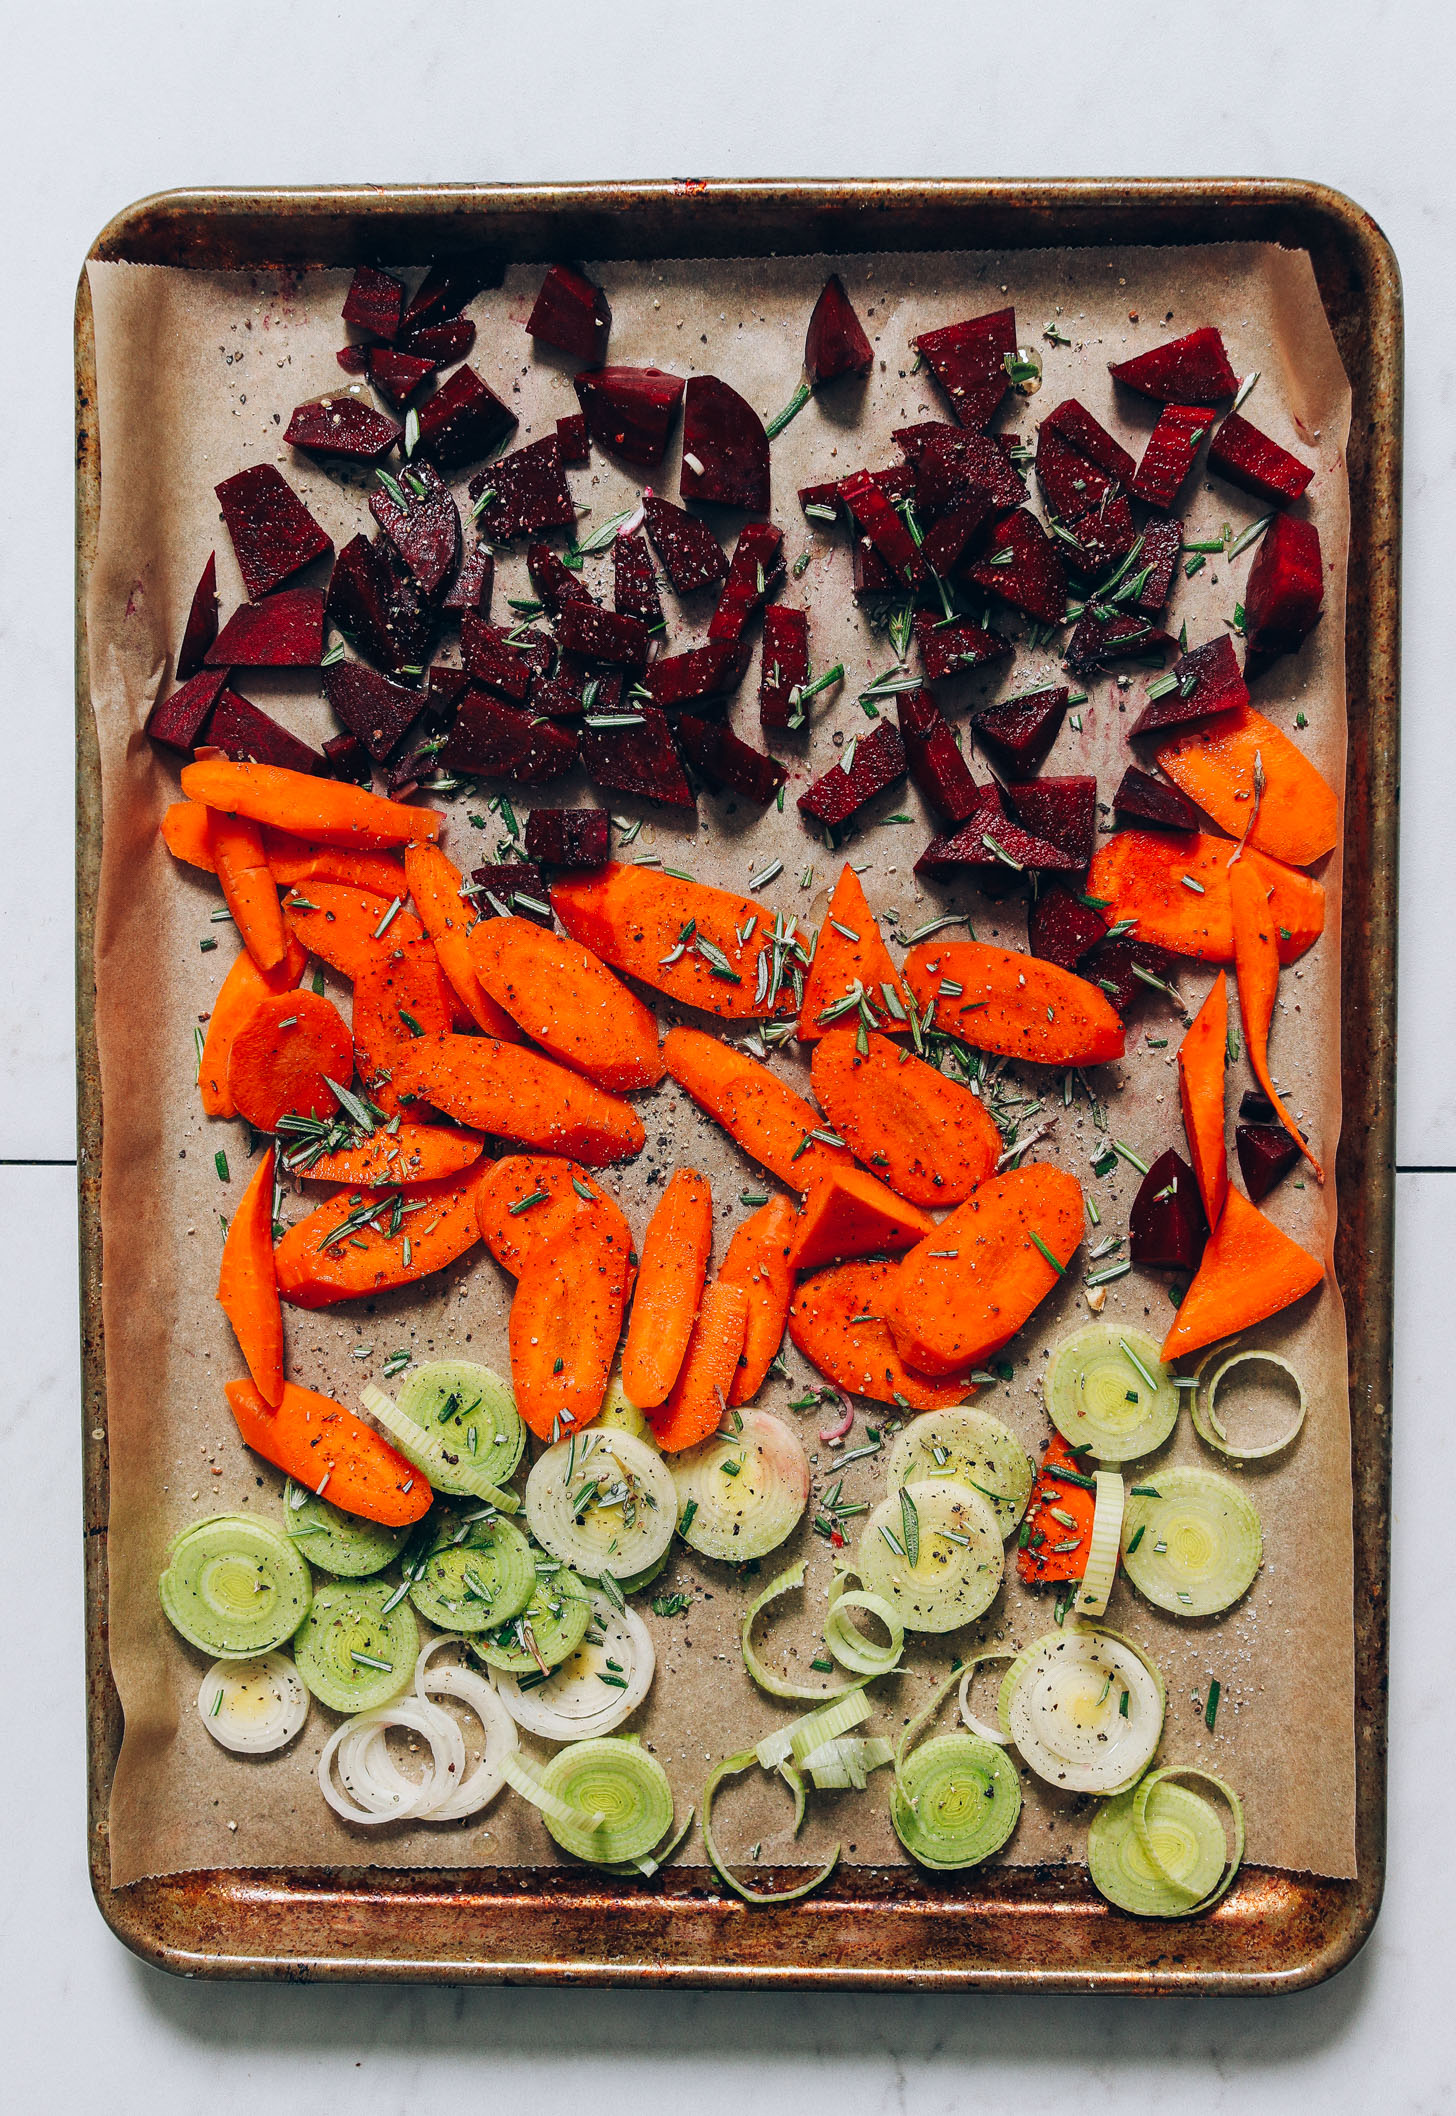 Baking sheet of beets, rosemary, carrots, and leeks